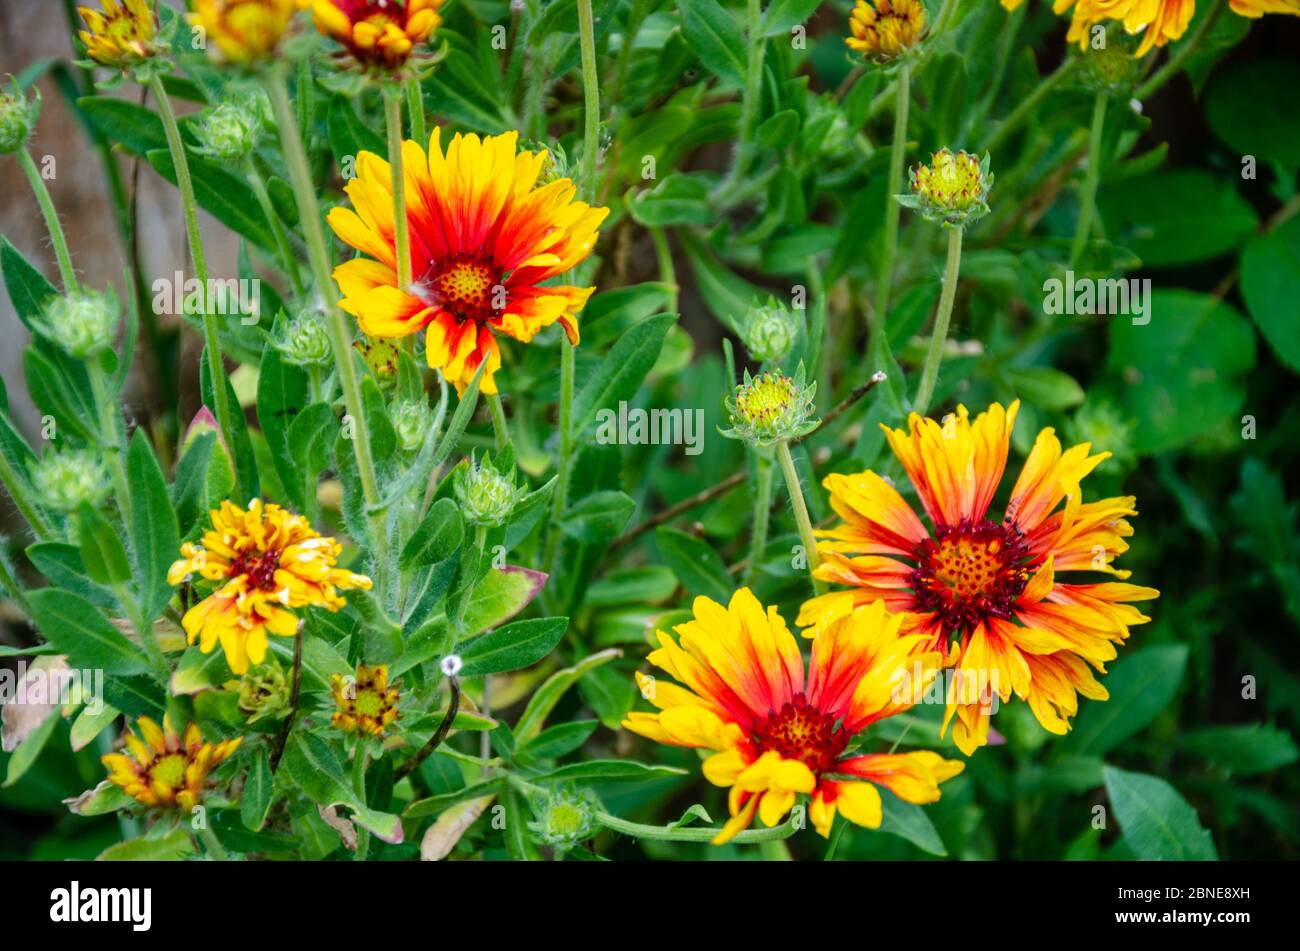 Guillardia flowers in a residential garden. Stock Photo